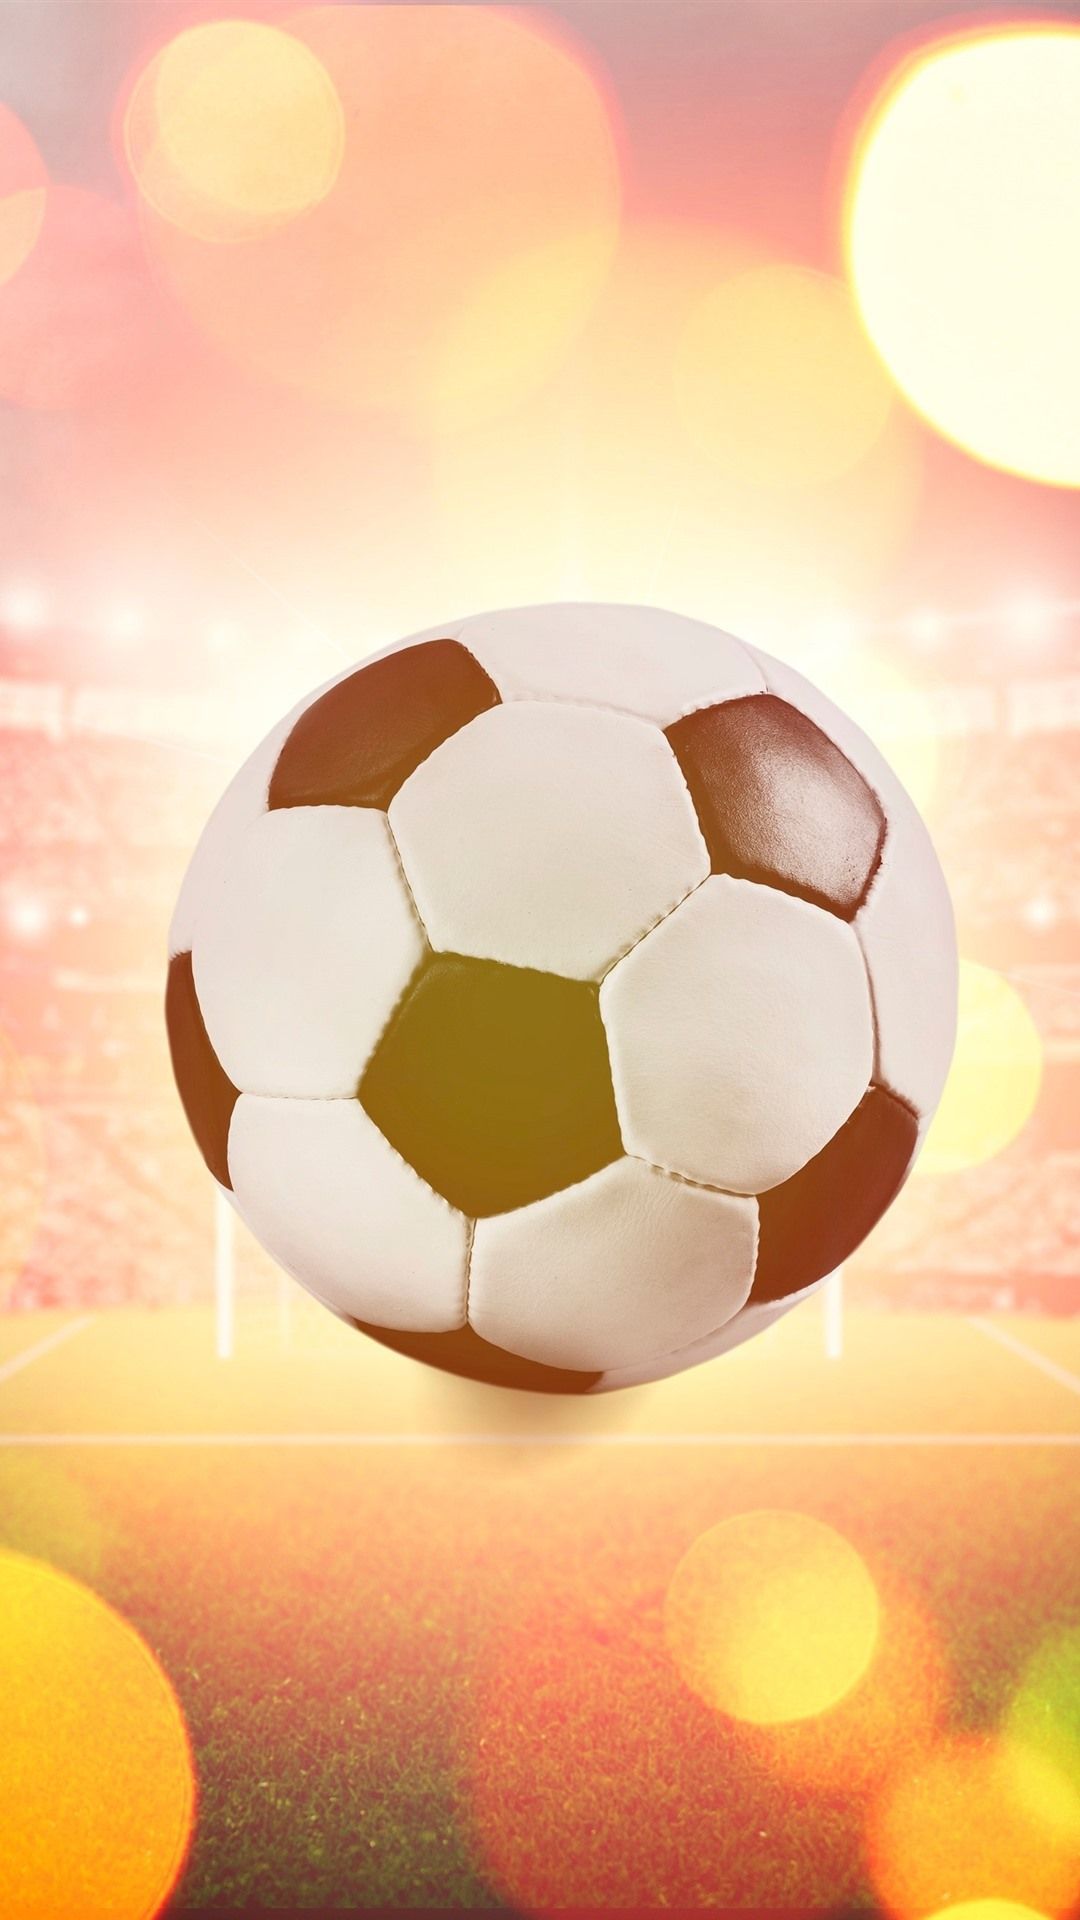 Soccer Girl iPhone Background. iPhone background, Soccer girl, Soccer